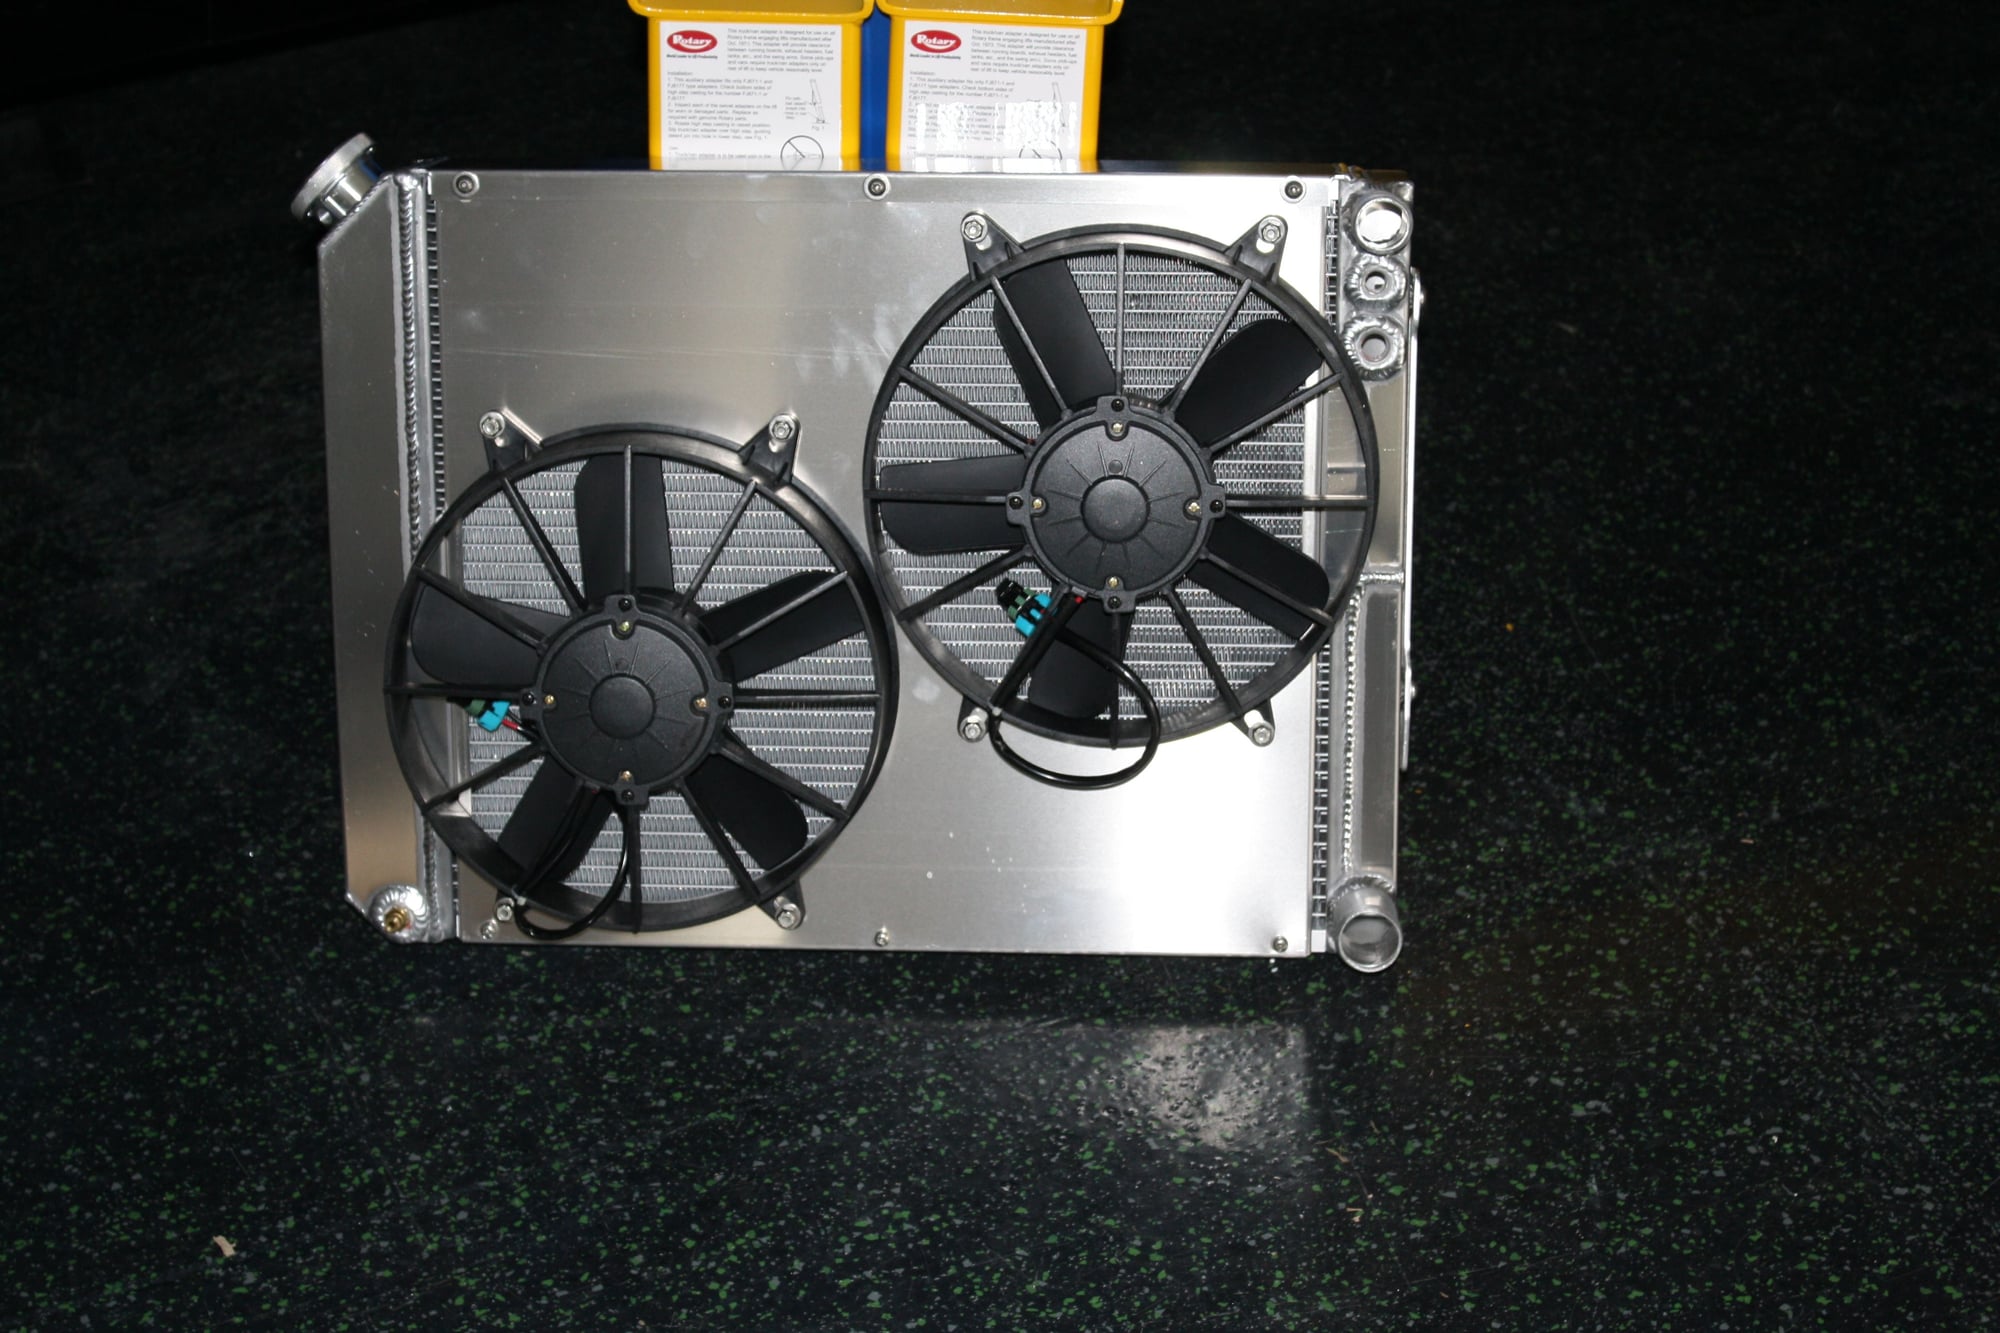  - Fs; 62-67 entropy radiator nova lsx swap, core support panel fillers - Bayville, NJ 08721, United States